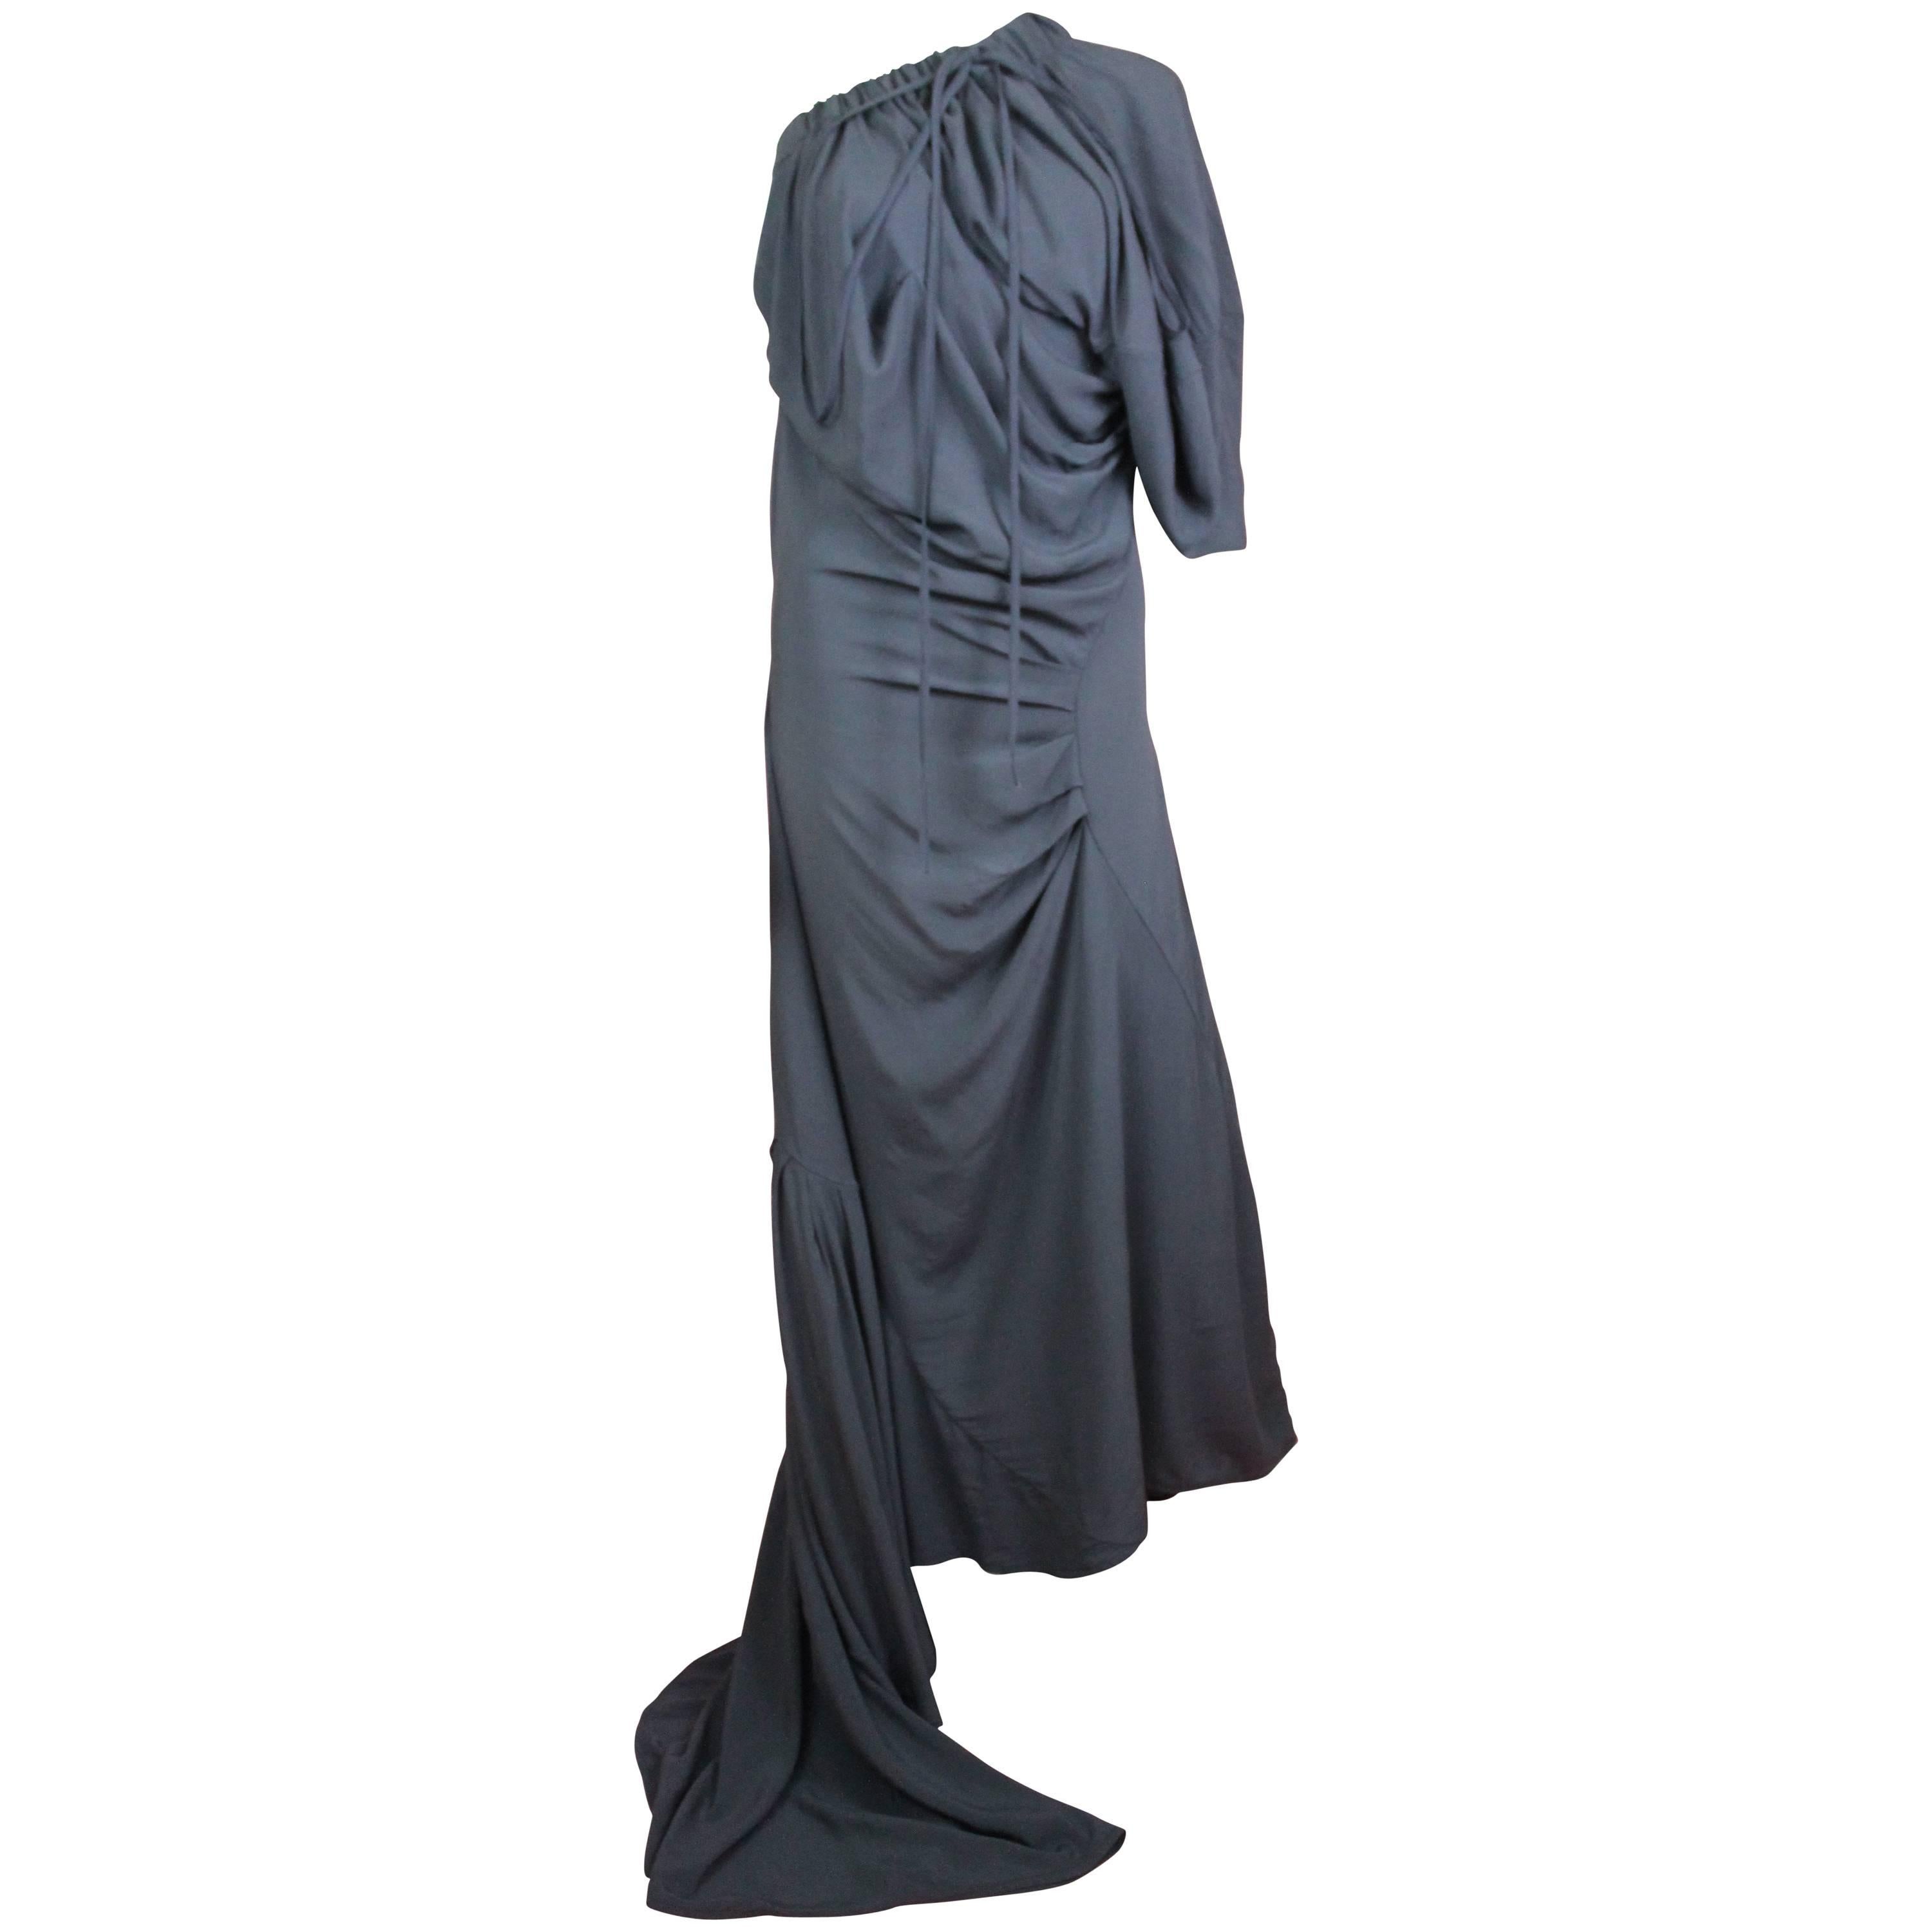 Vivienne Westwood Gold Label Dark Grey Toga "Helix Dress", A / W 2015, Size OS